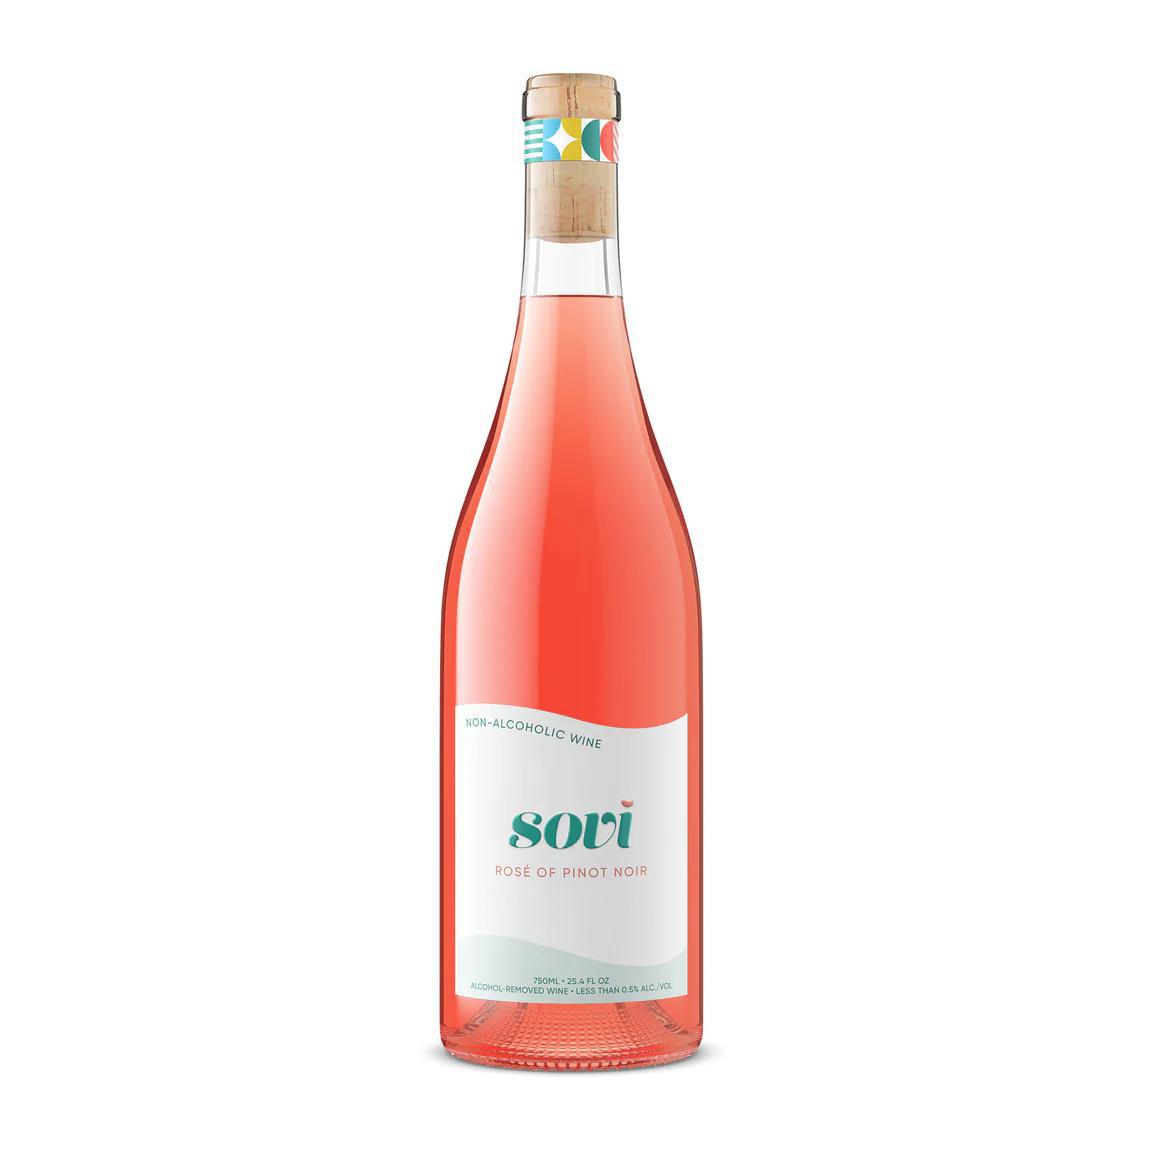 Sovi Rosé of Pinot Noir (750 ml)